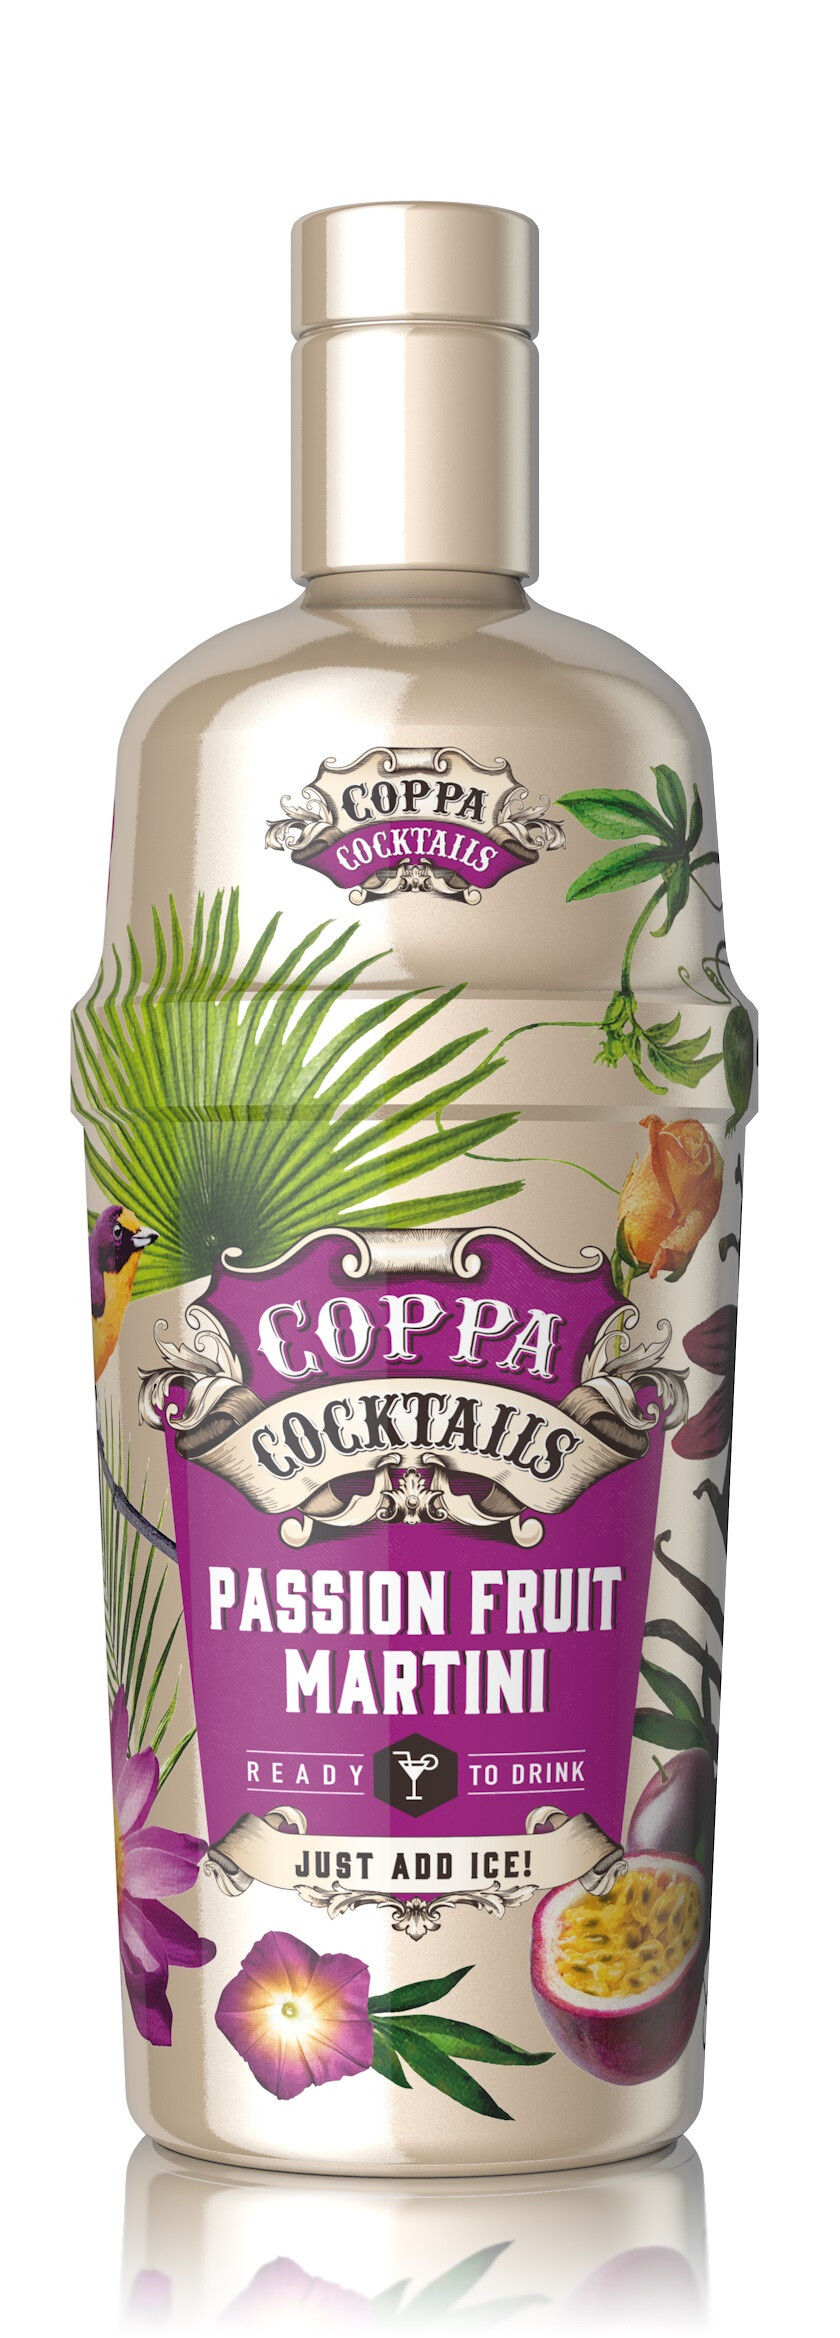 Coppa Cocktails Passion Fruit Martini 70cl 10%